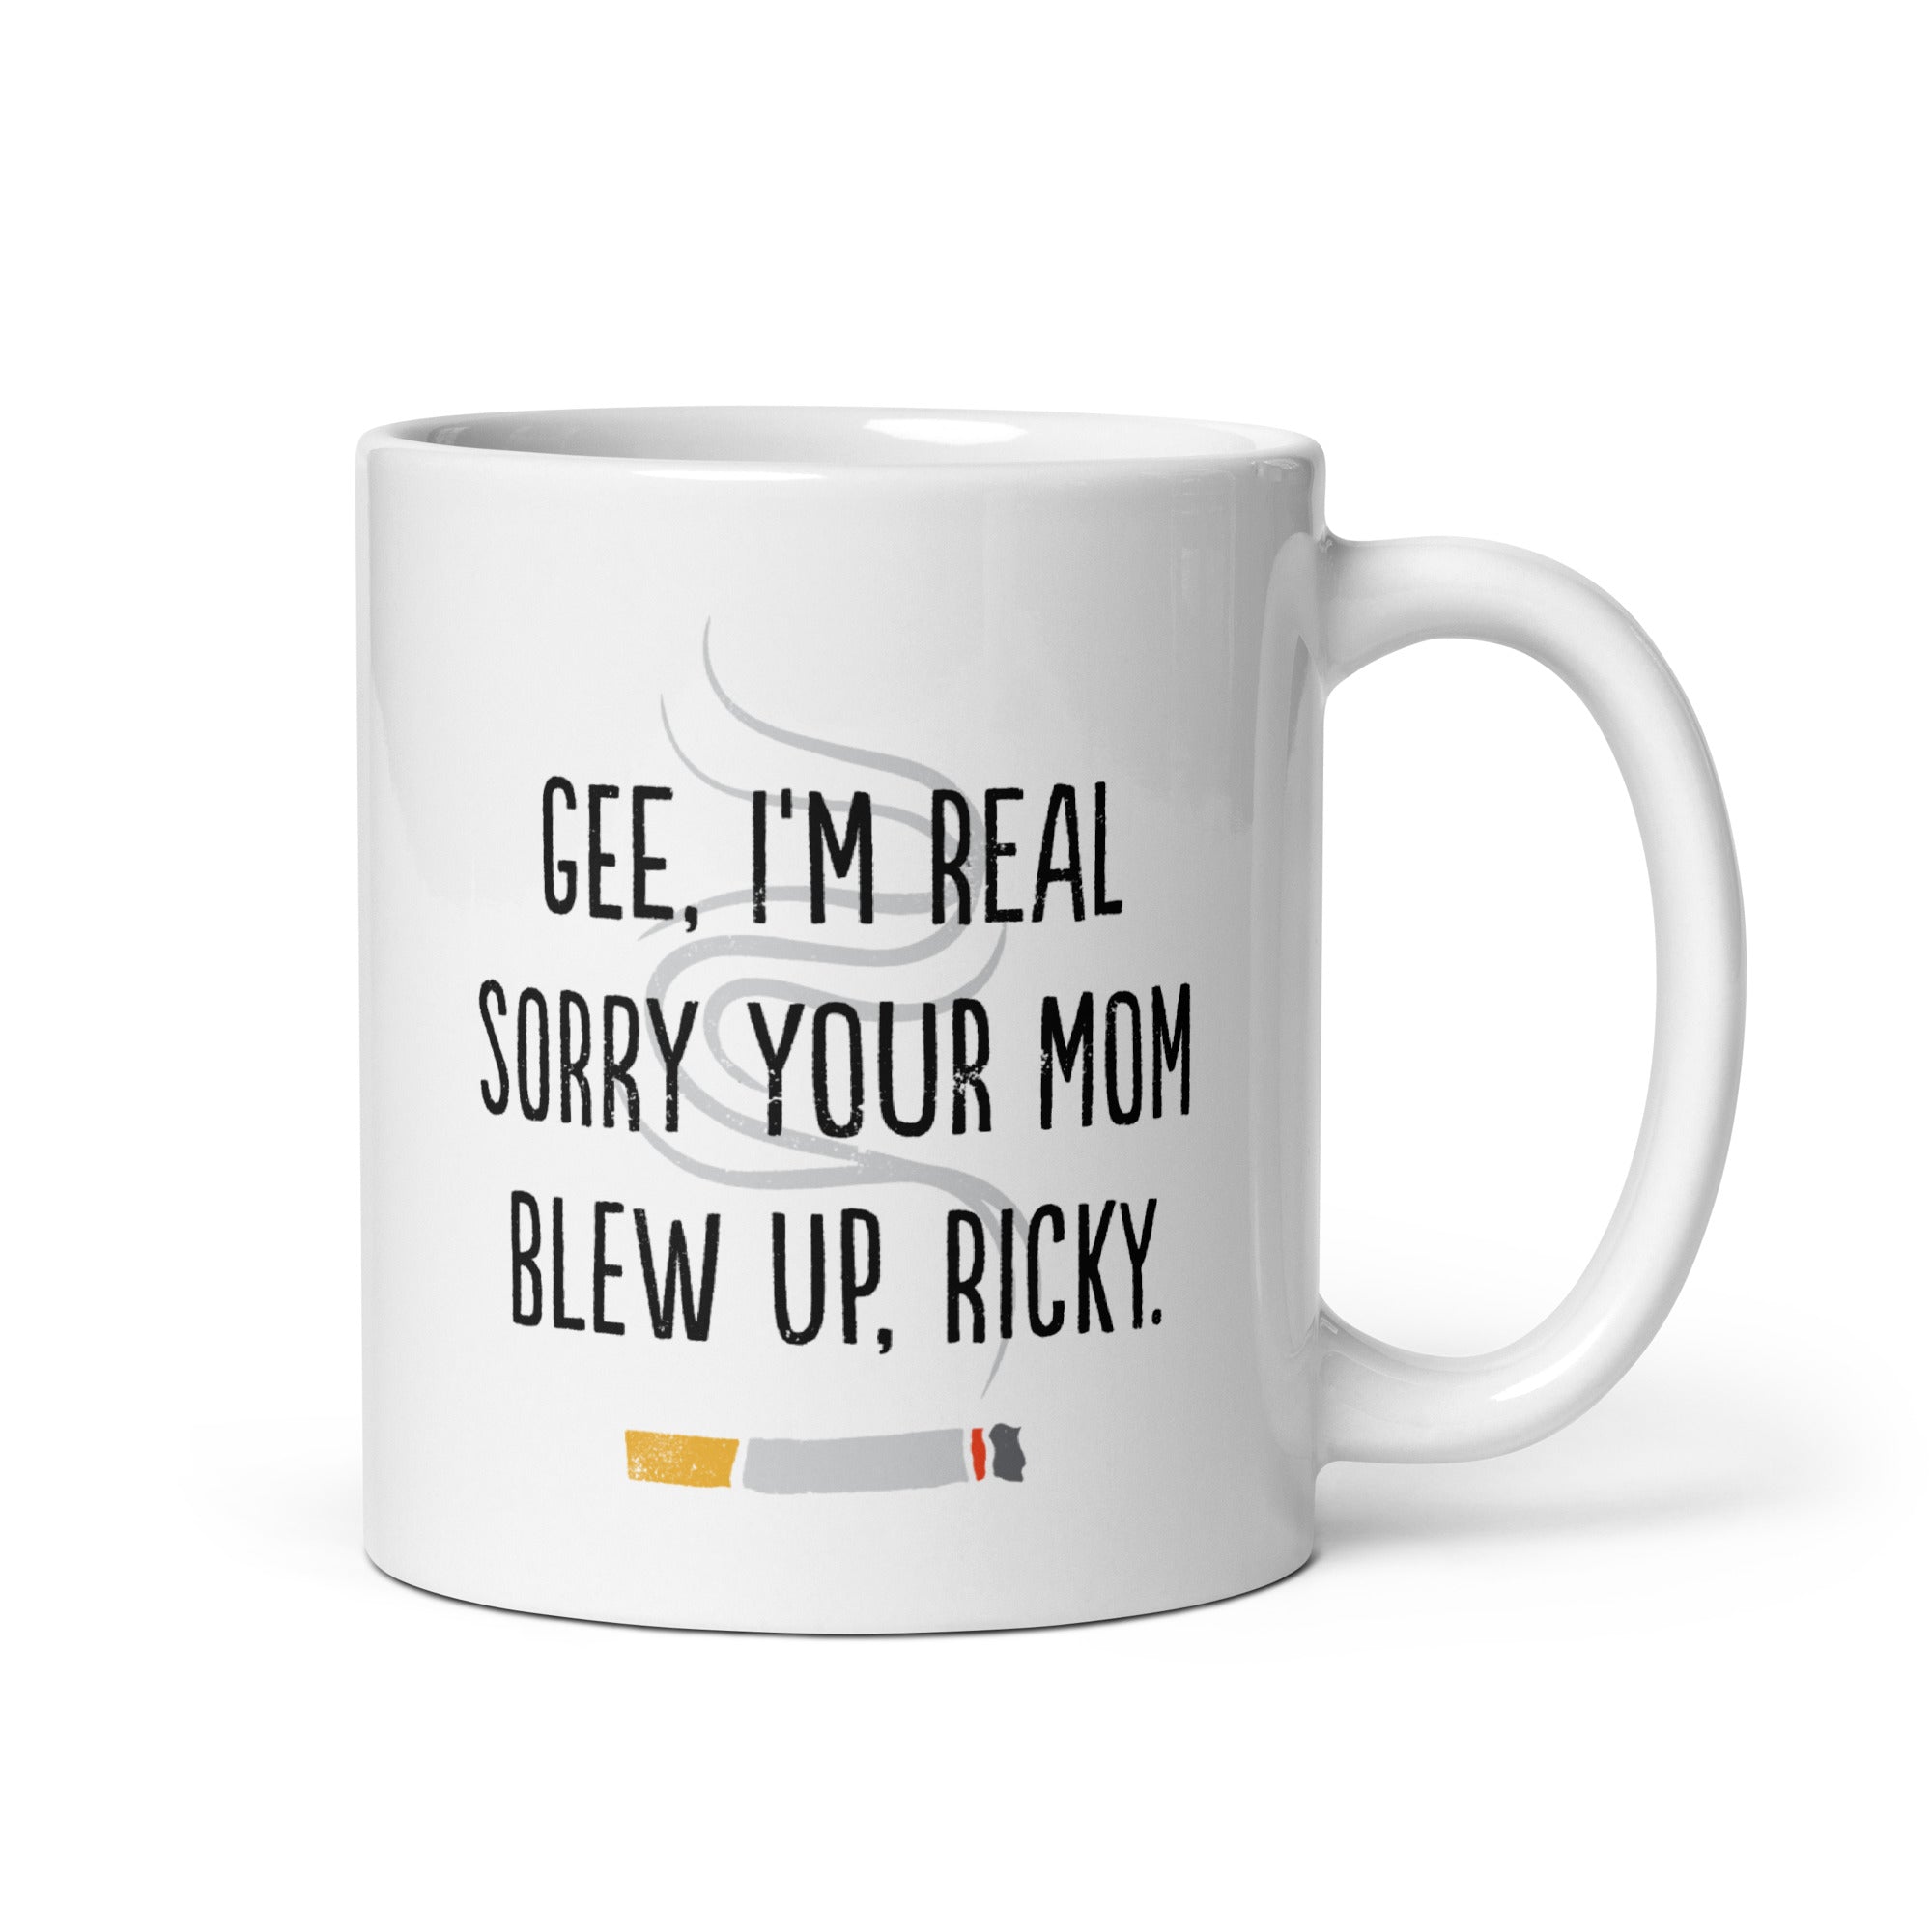 Gee, I'm Really Sorry Your Mom Blew Up, Ricky - 11oz Coffee Mug